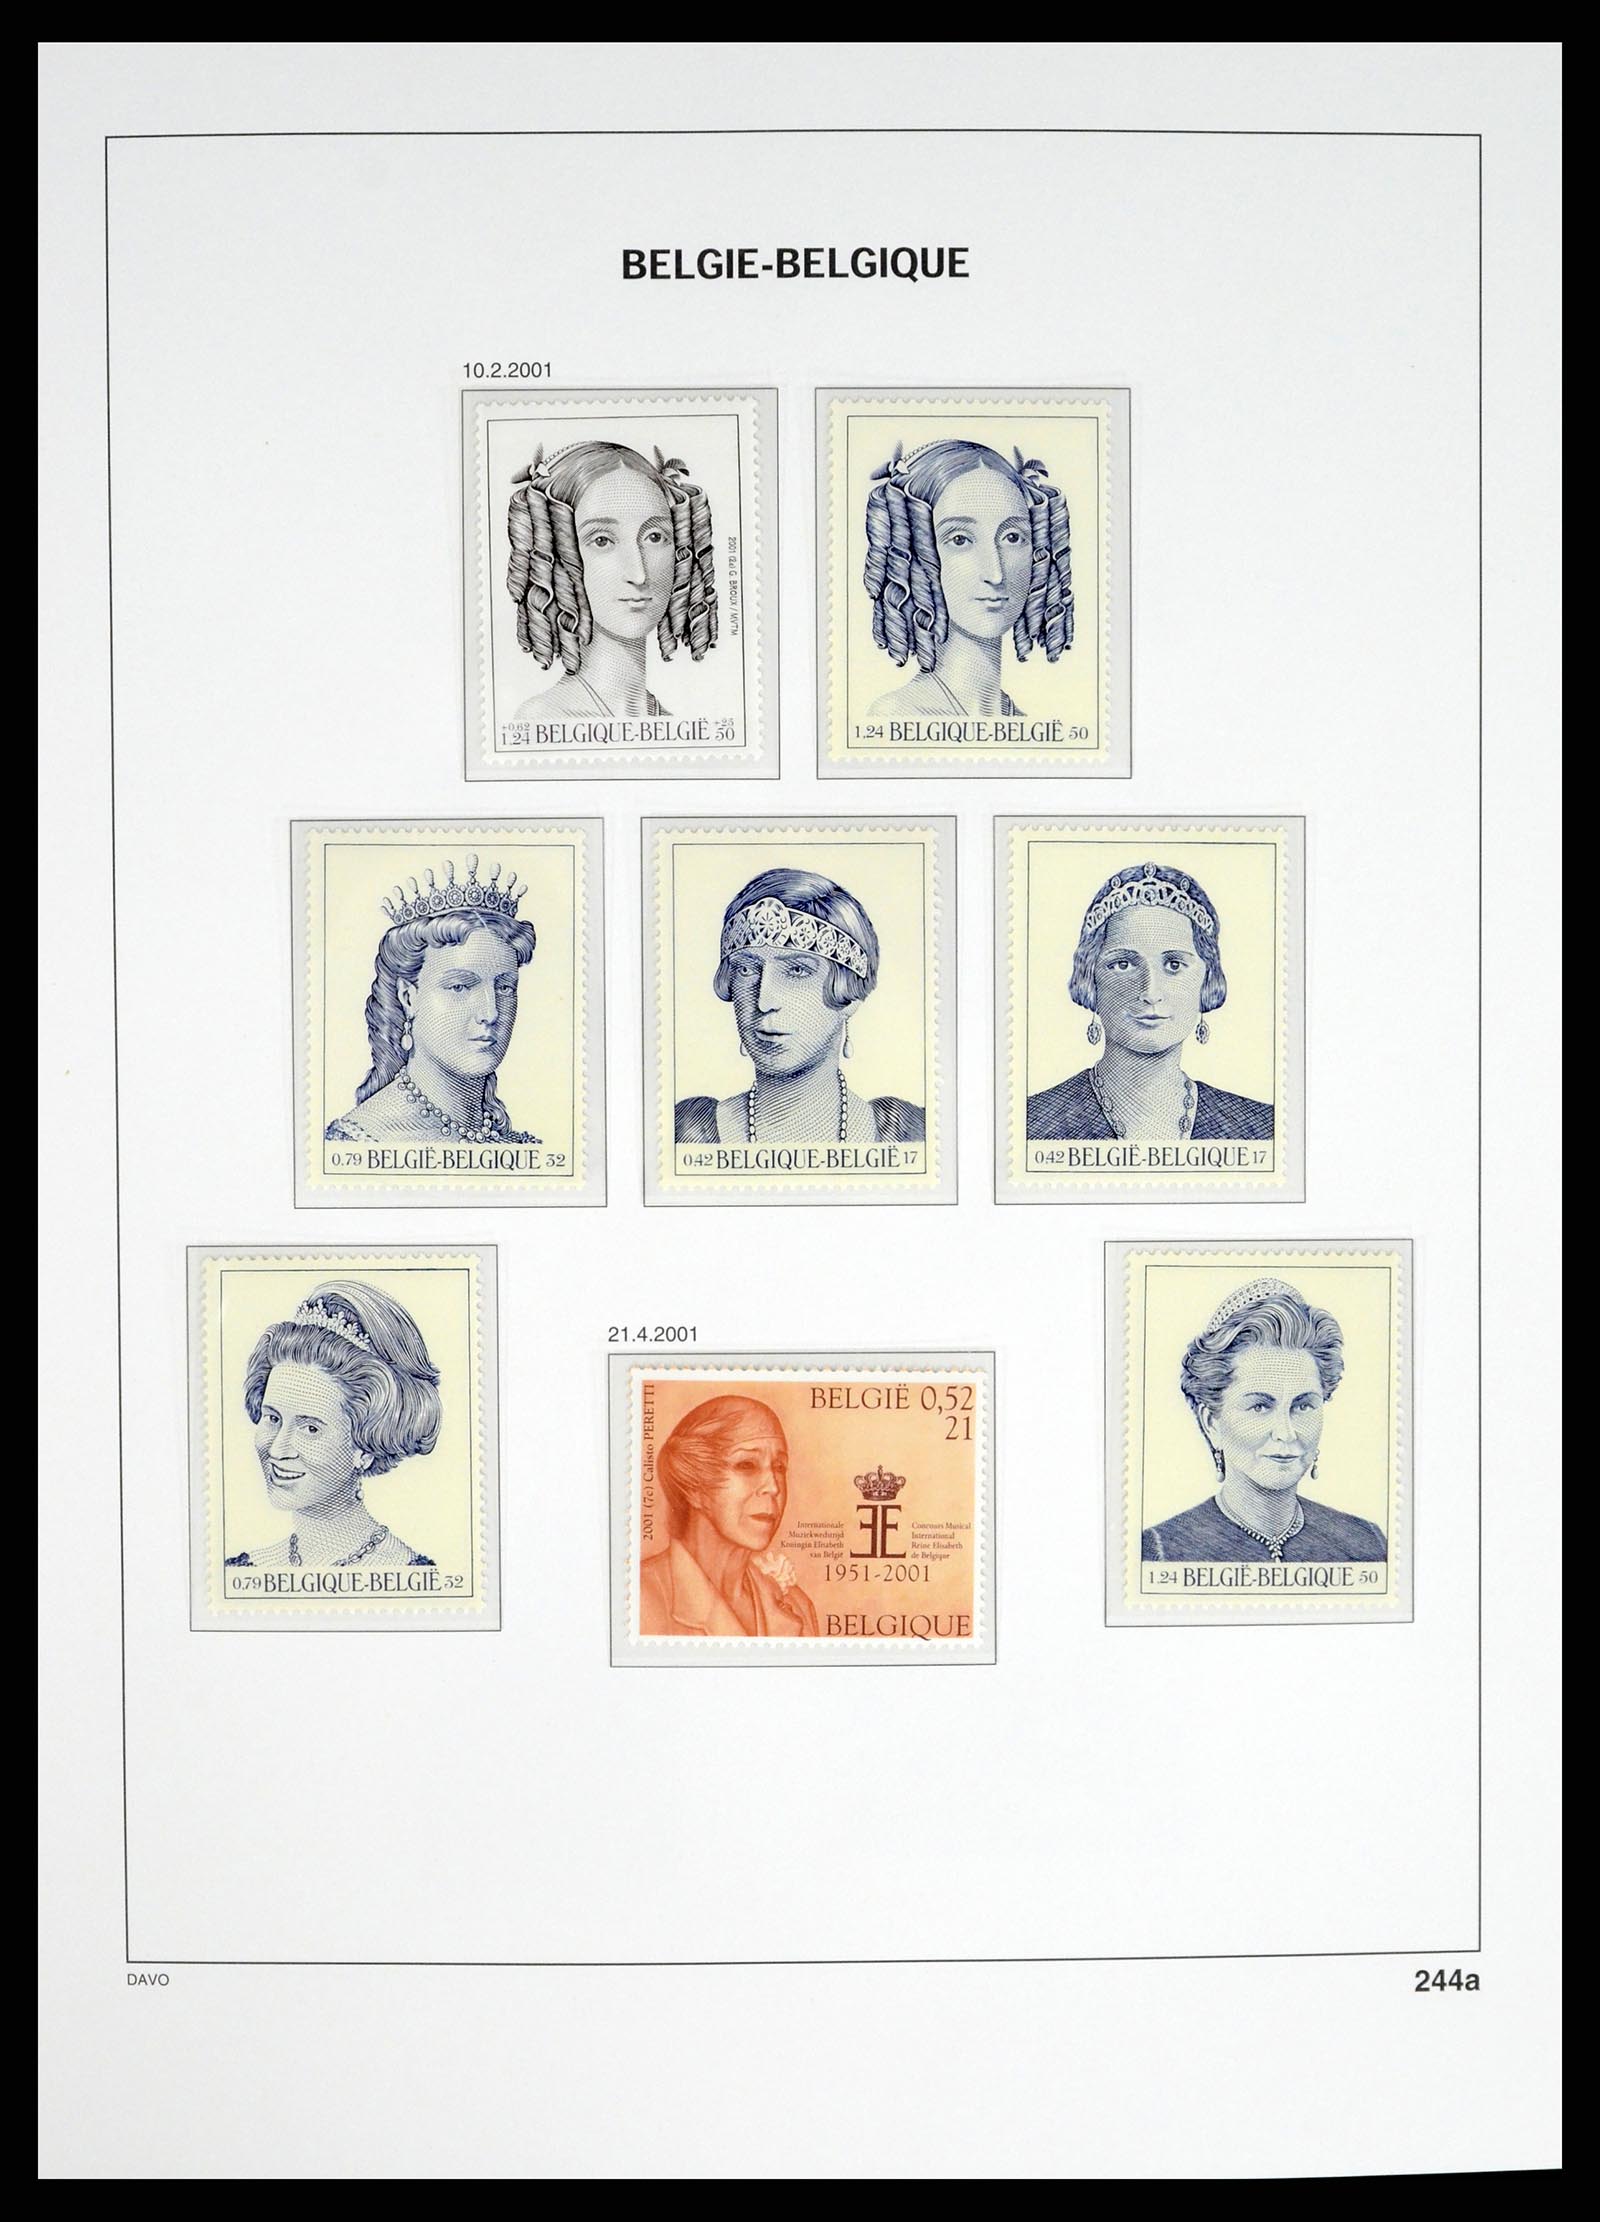 37368 180 - Stamp collection 37368 Belgium 1969-2003.